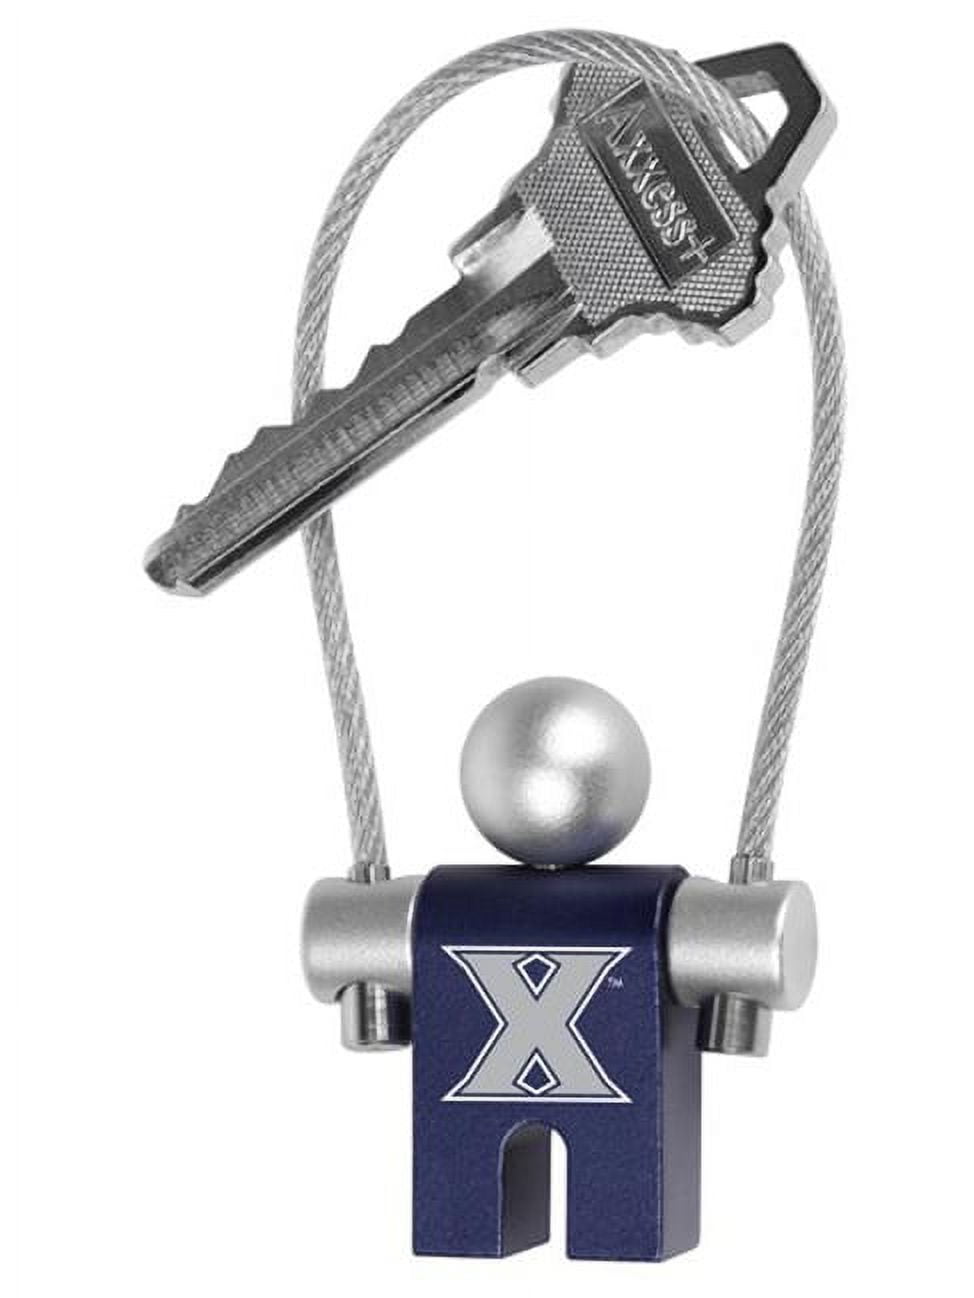 Xavier key chain 